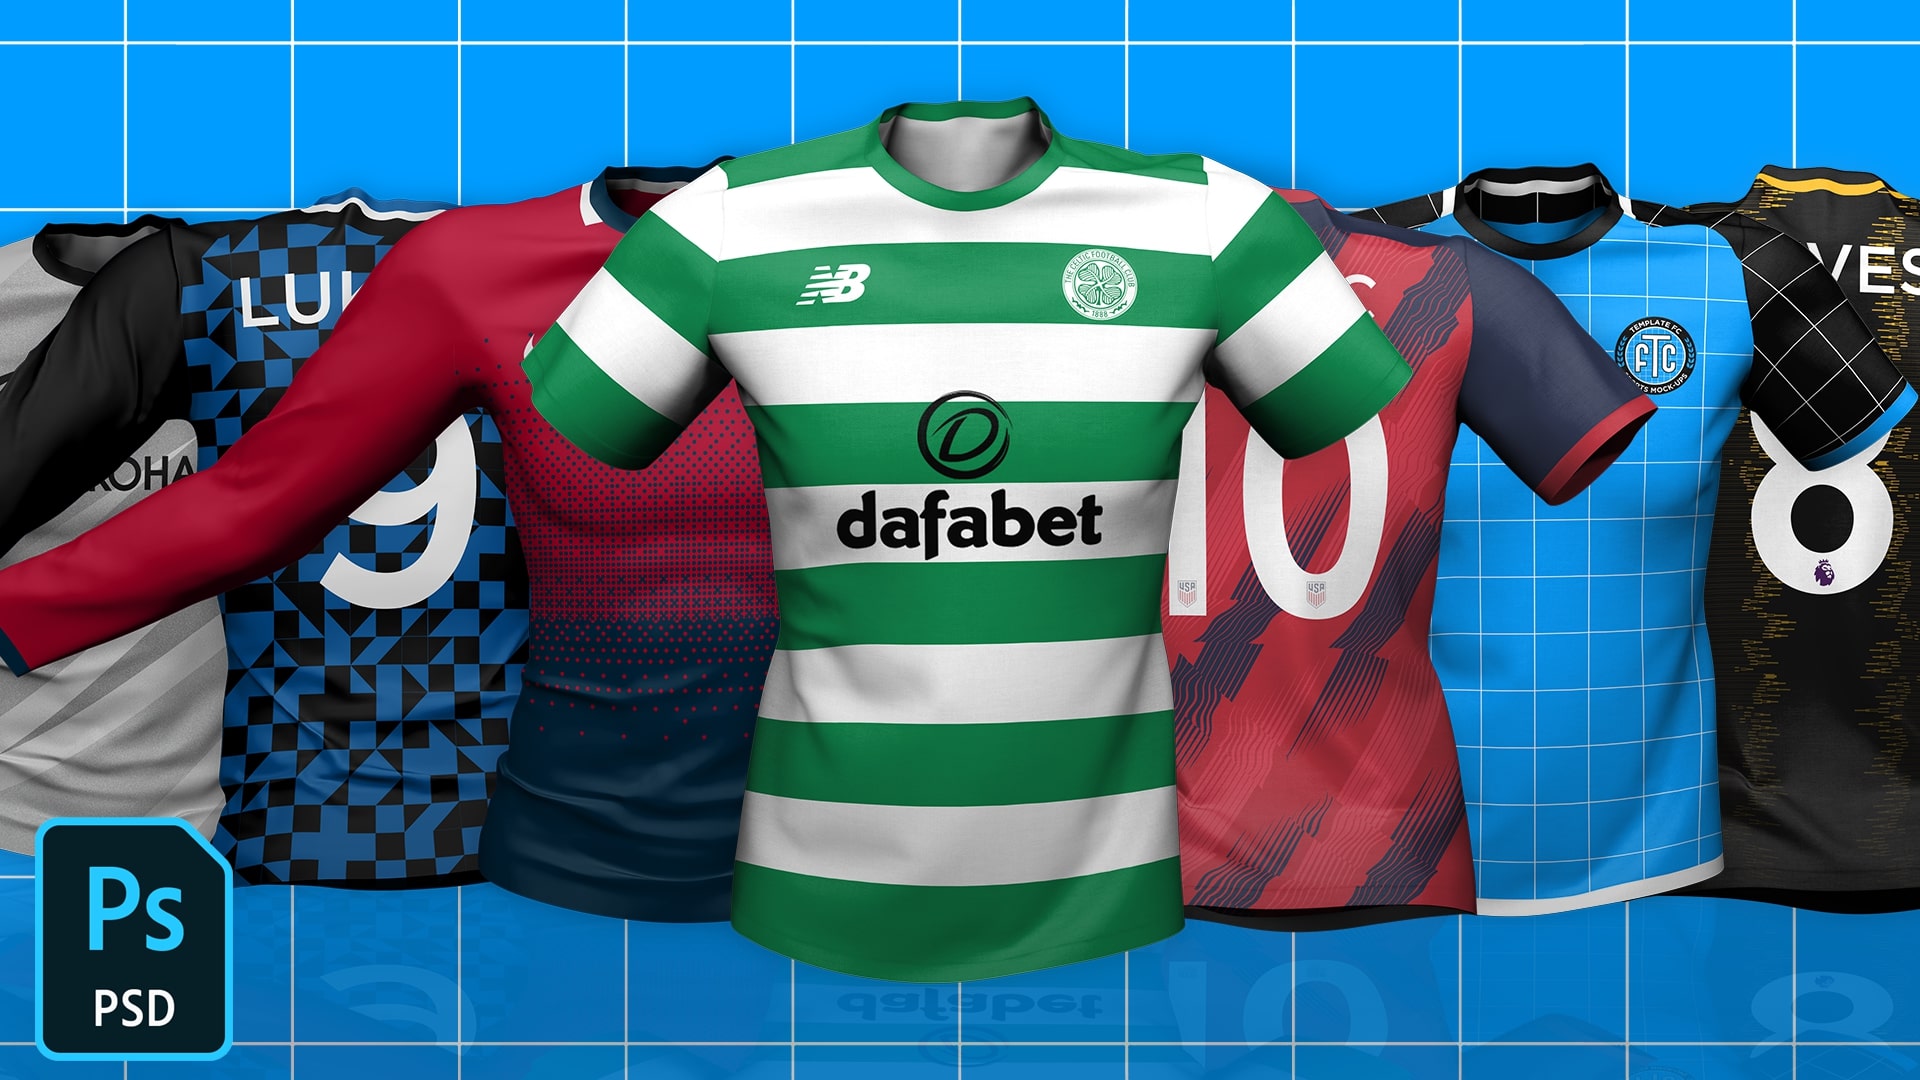 Celtic Away football shirt 2019 - 2020. Sponsored by dafabet